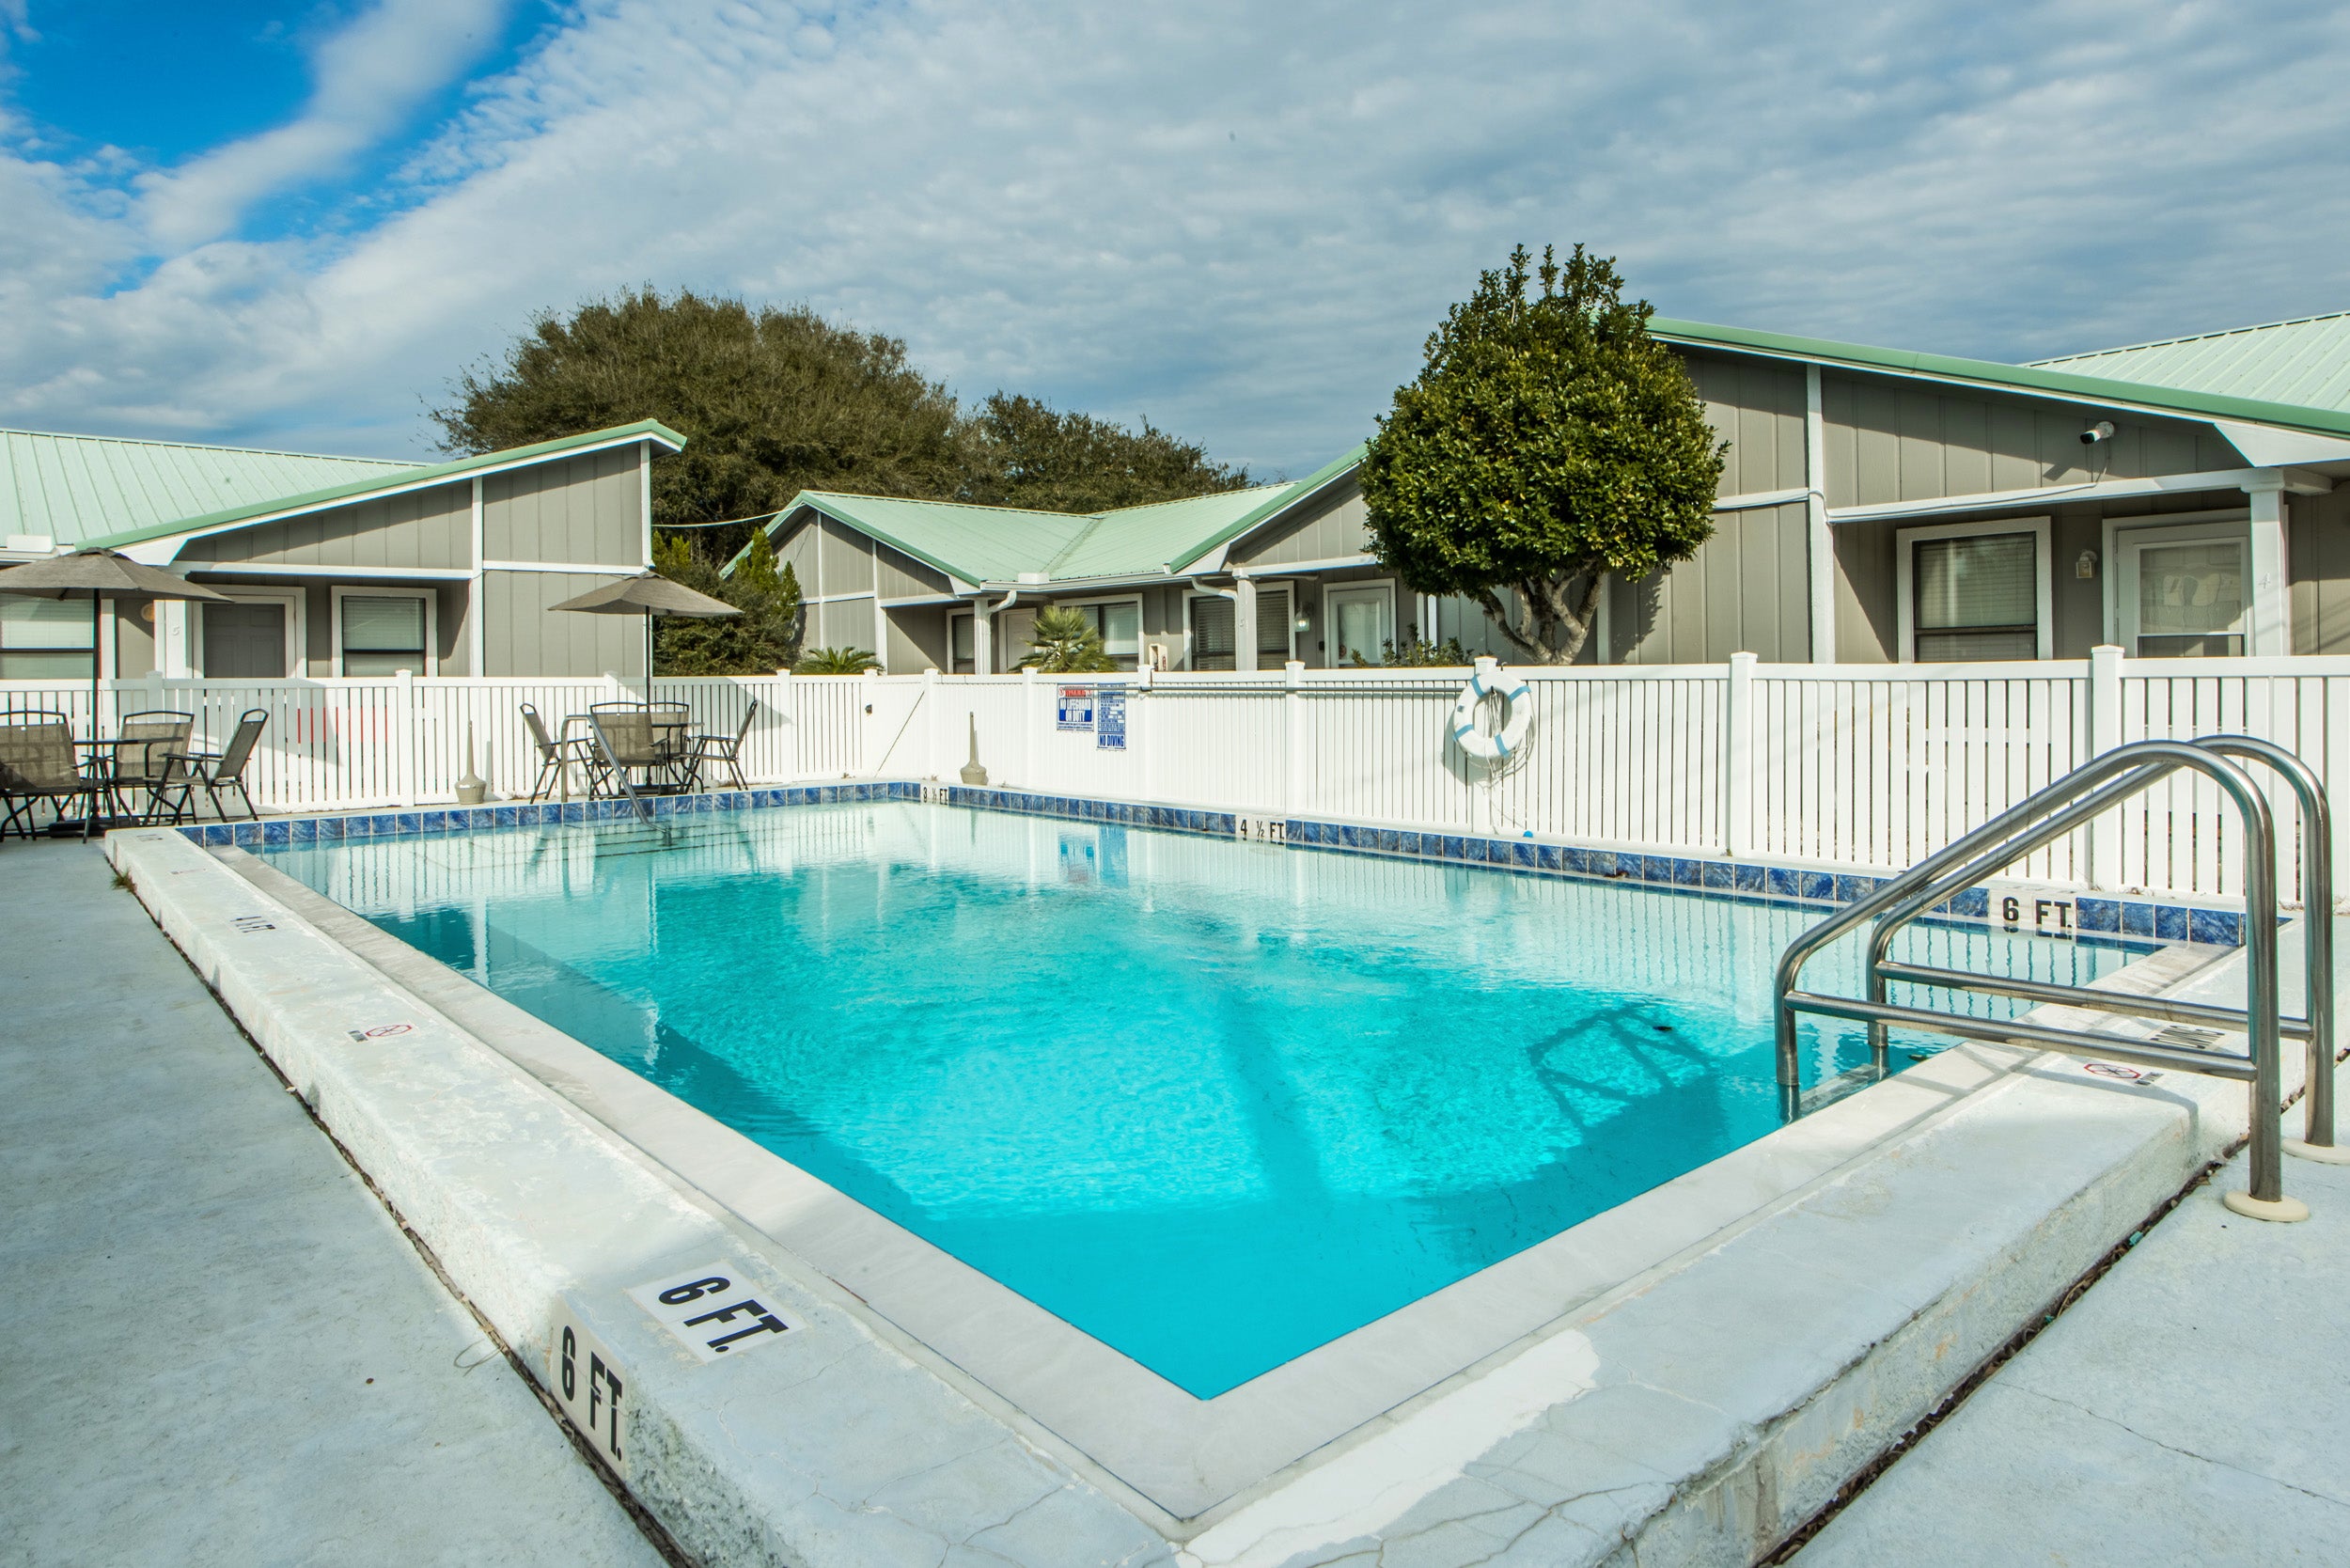 Community pool at Gulf Crest